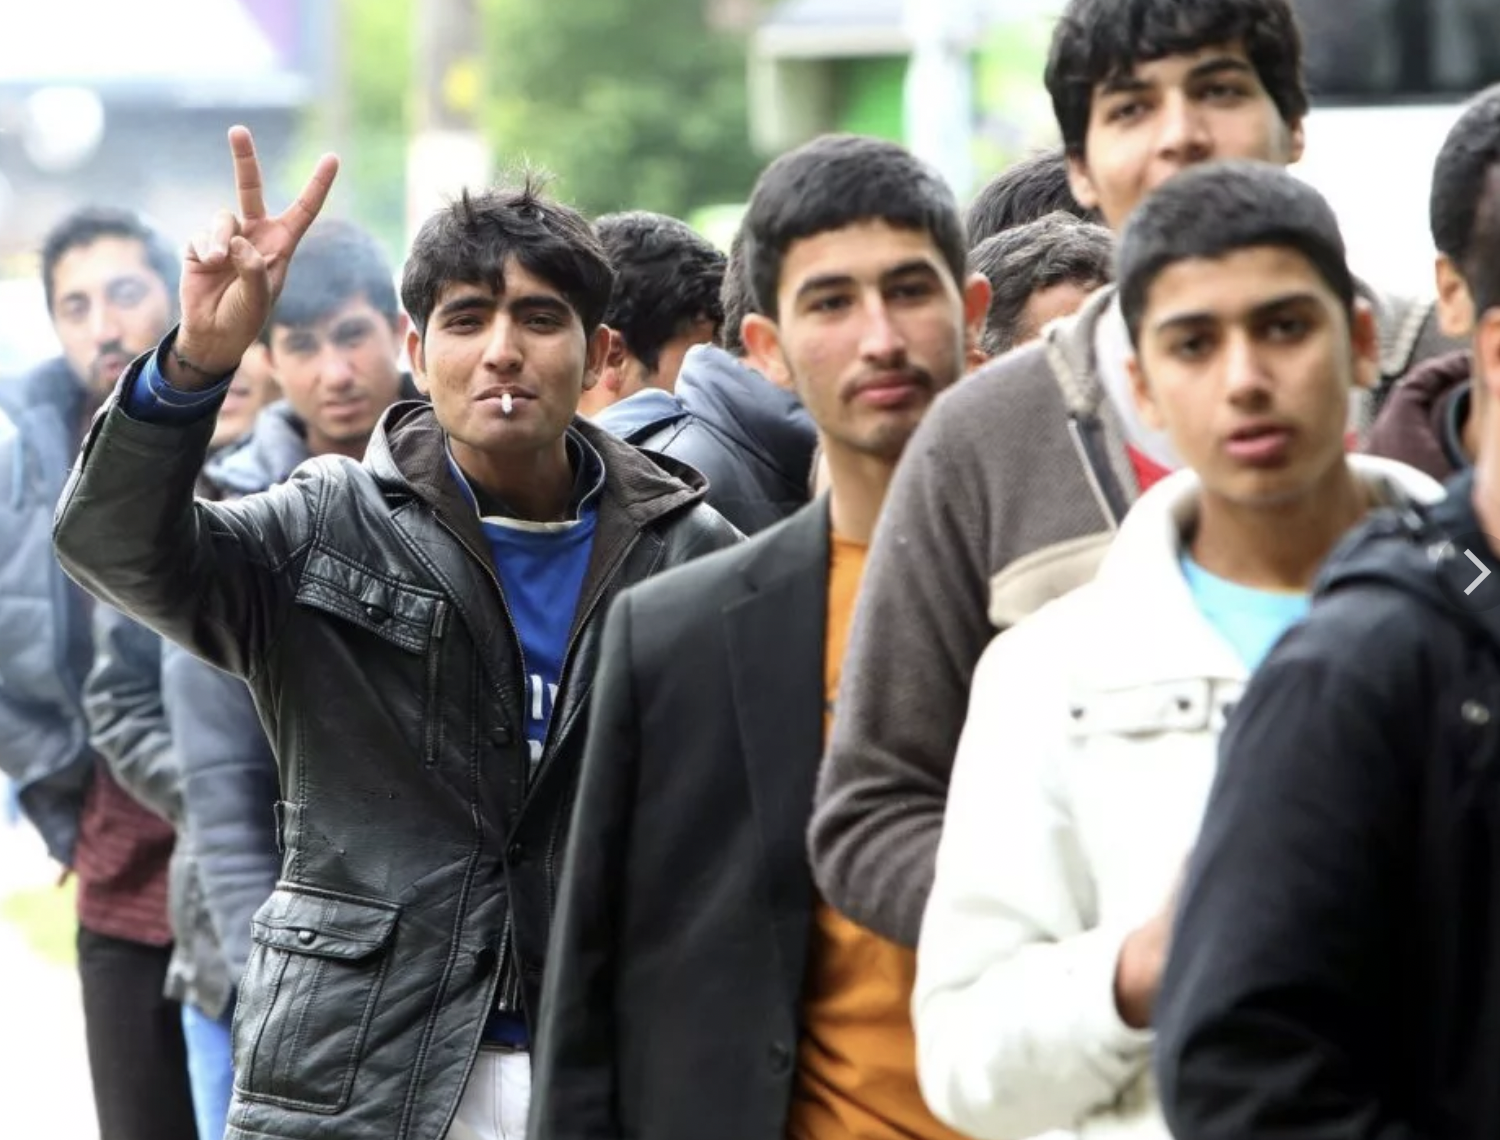 Таджик мигрант. Молодые мигранты. Гастарбайтеры молодые. Мигранты узбеки. Таджики мигранты.